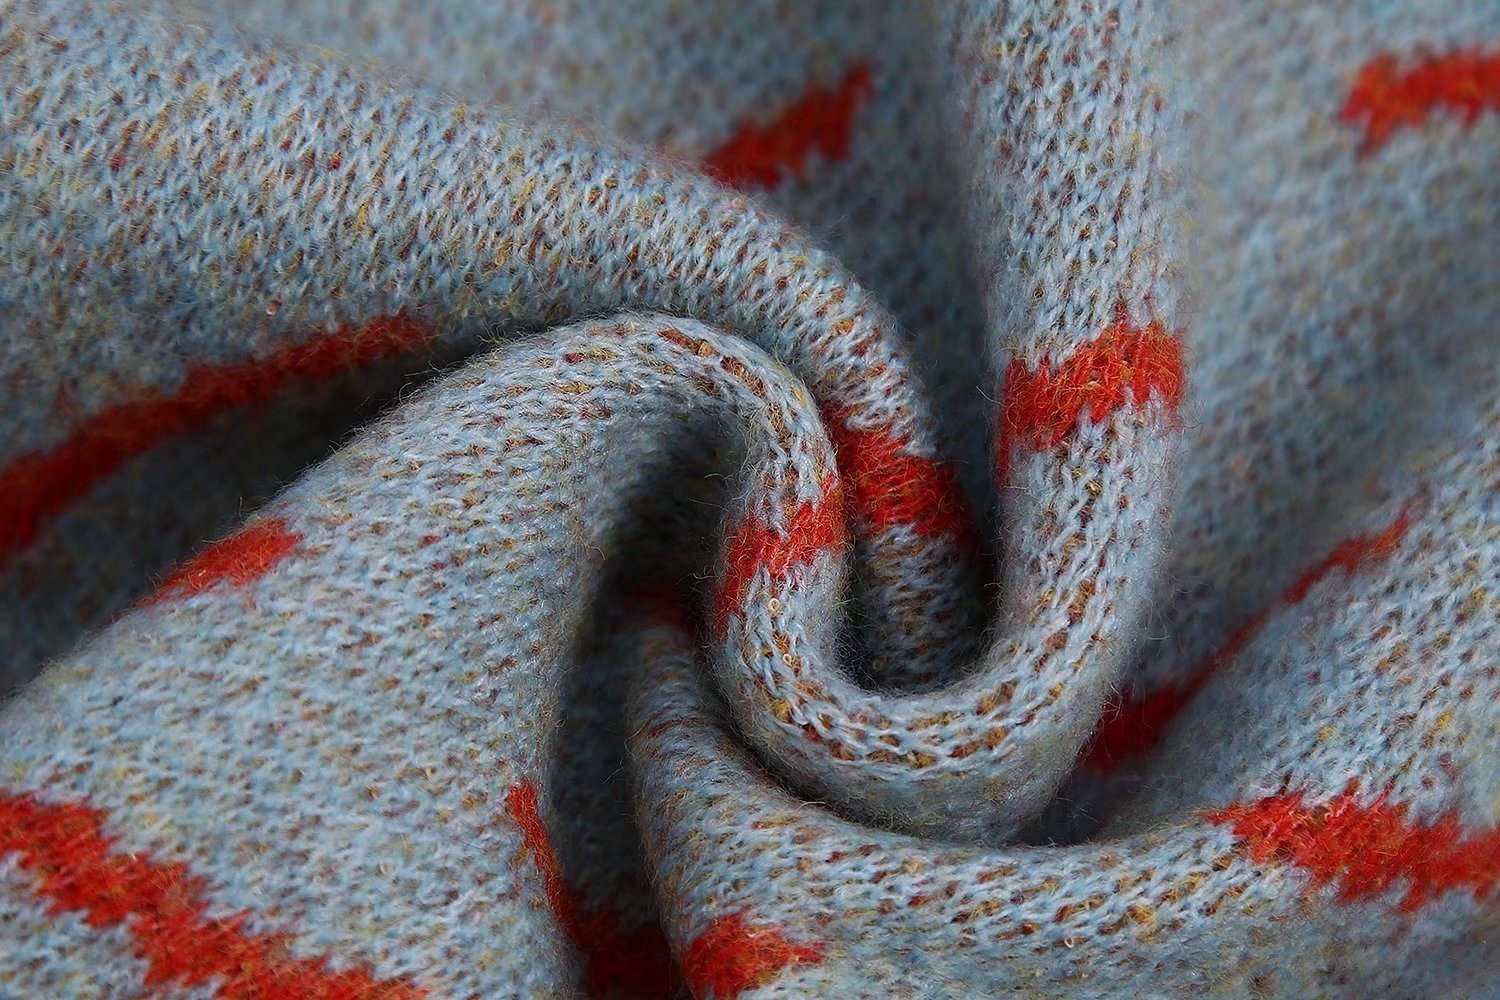 Round Neck Sleeveless Animal Pattern Knitted Vest NSXFL113870